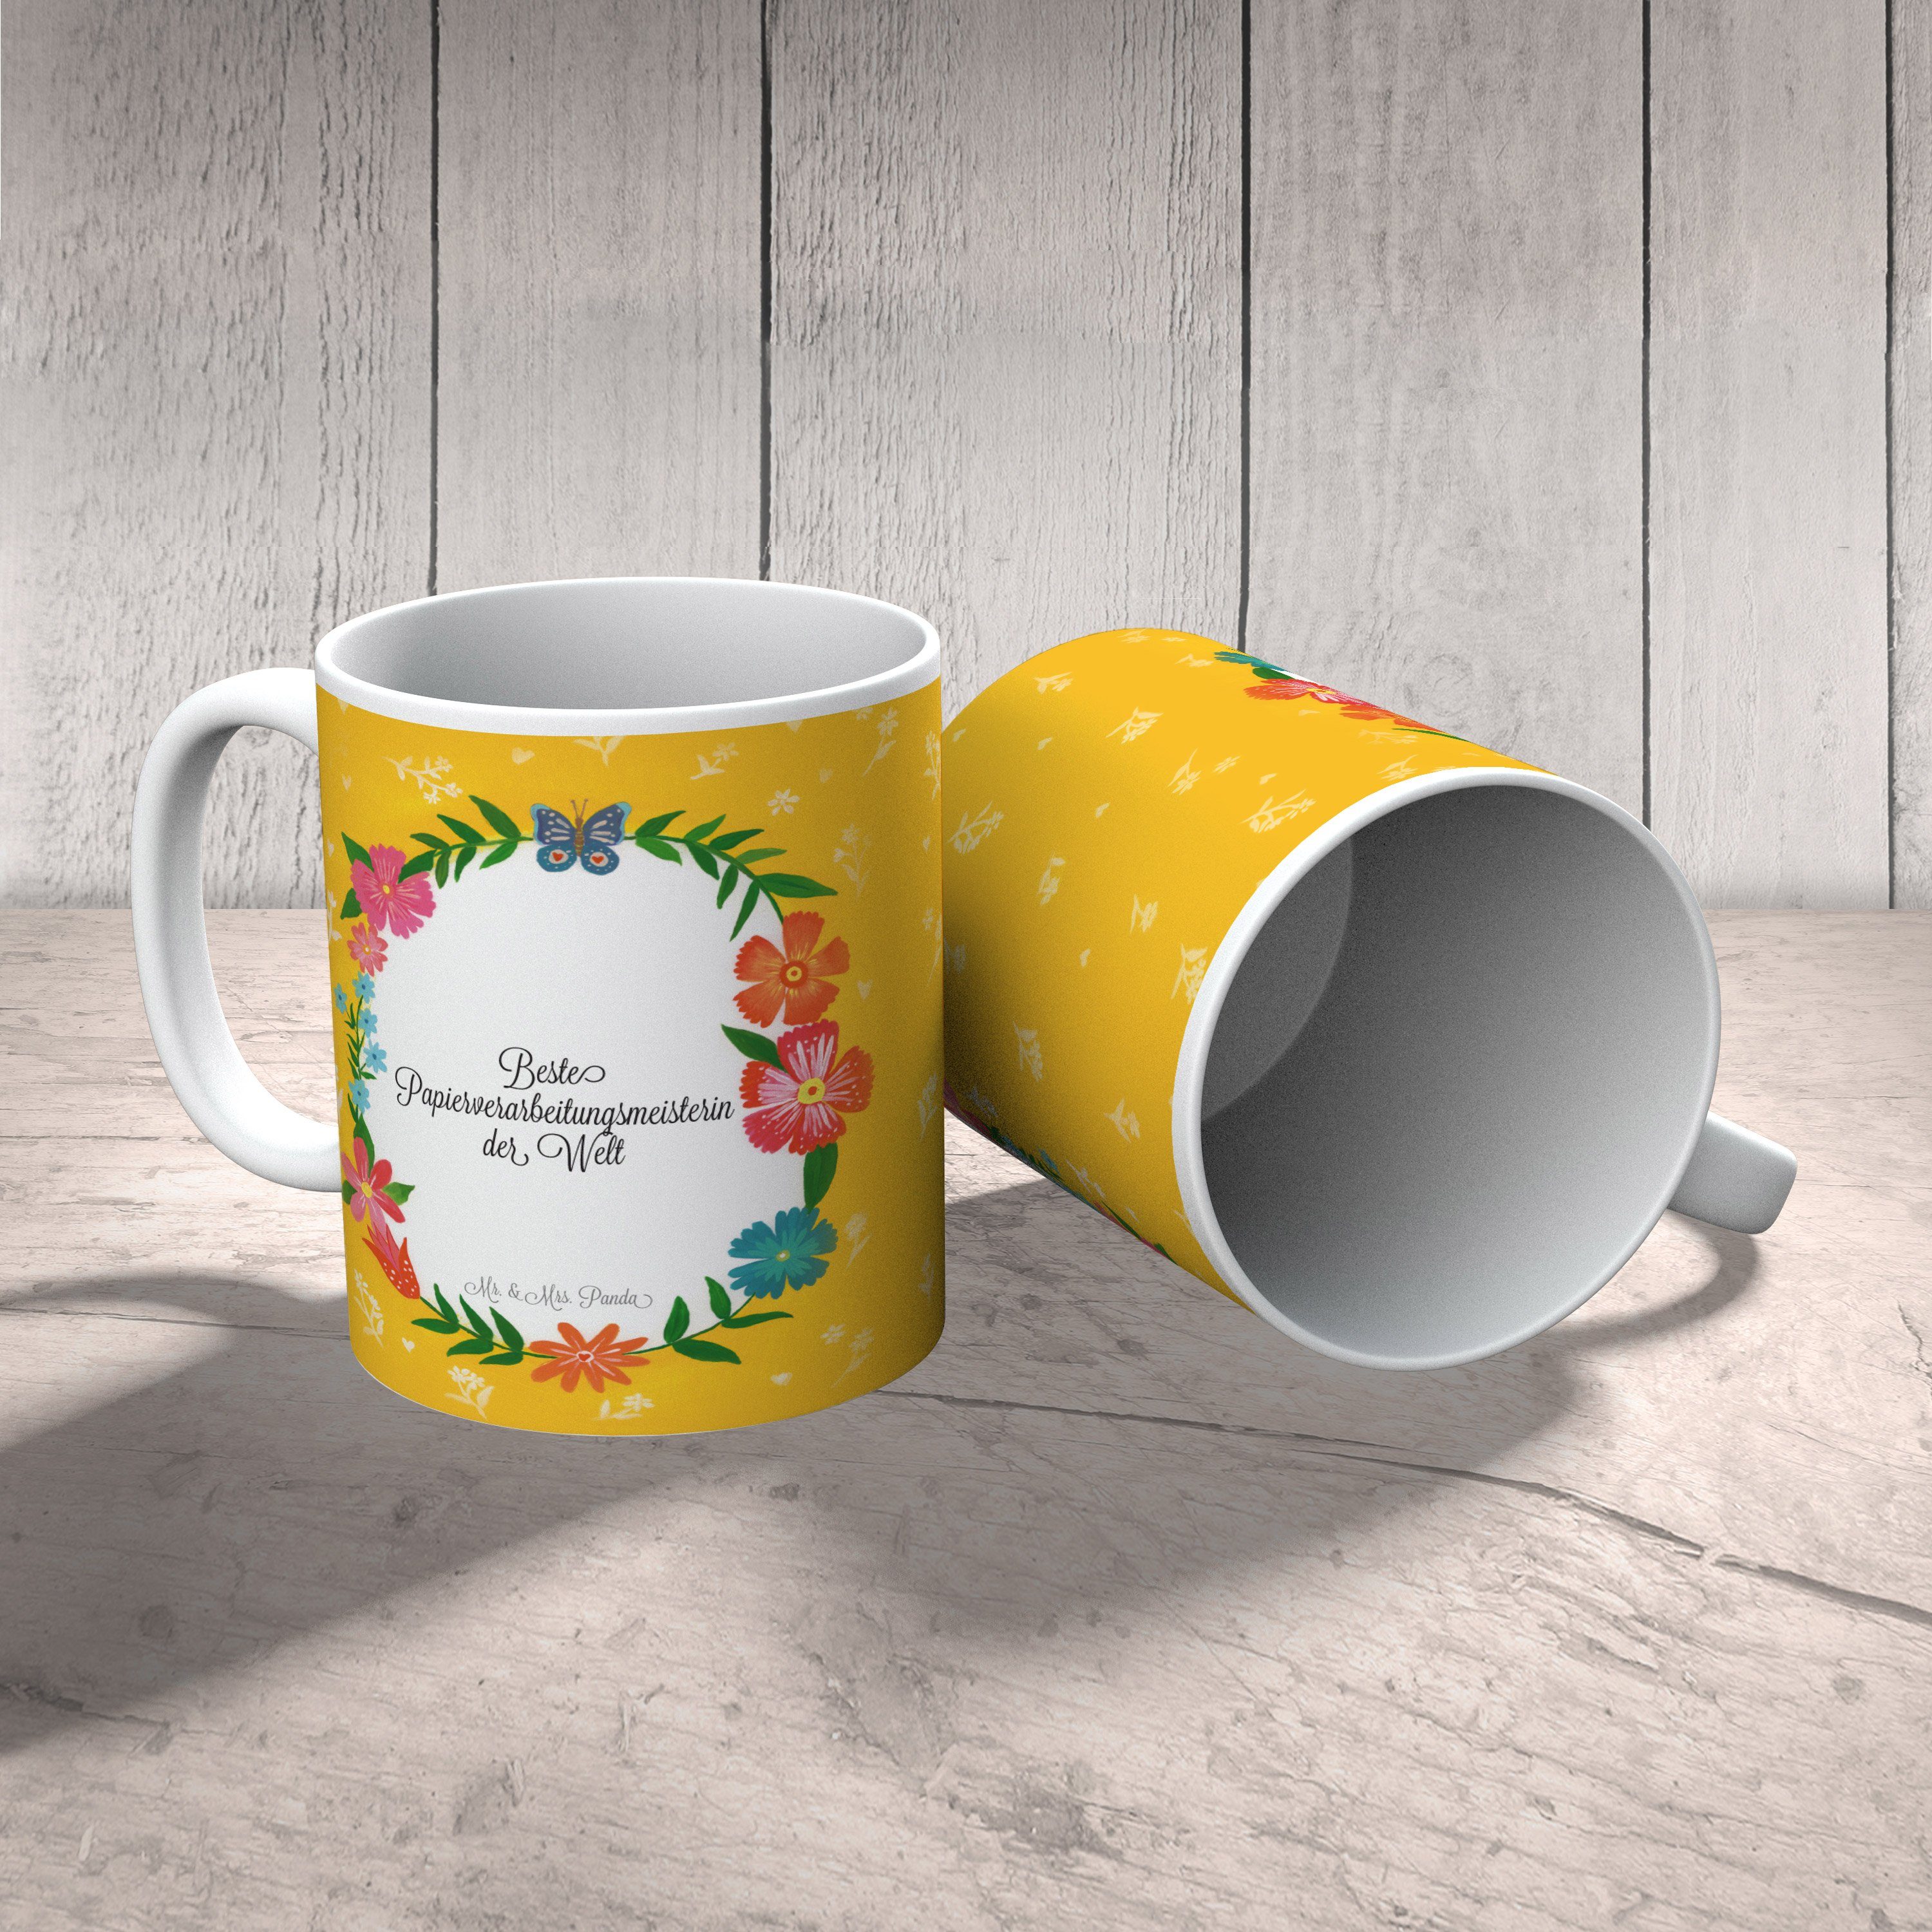 Mr. & Mrs. Panda A, - Motive, Tasse Kaffeetasse, Tasse Papierverarbeitungsmeisterin Geschenk, Keramik